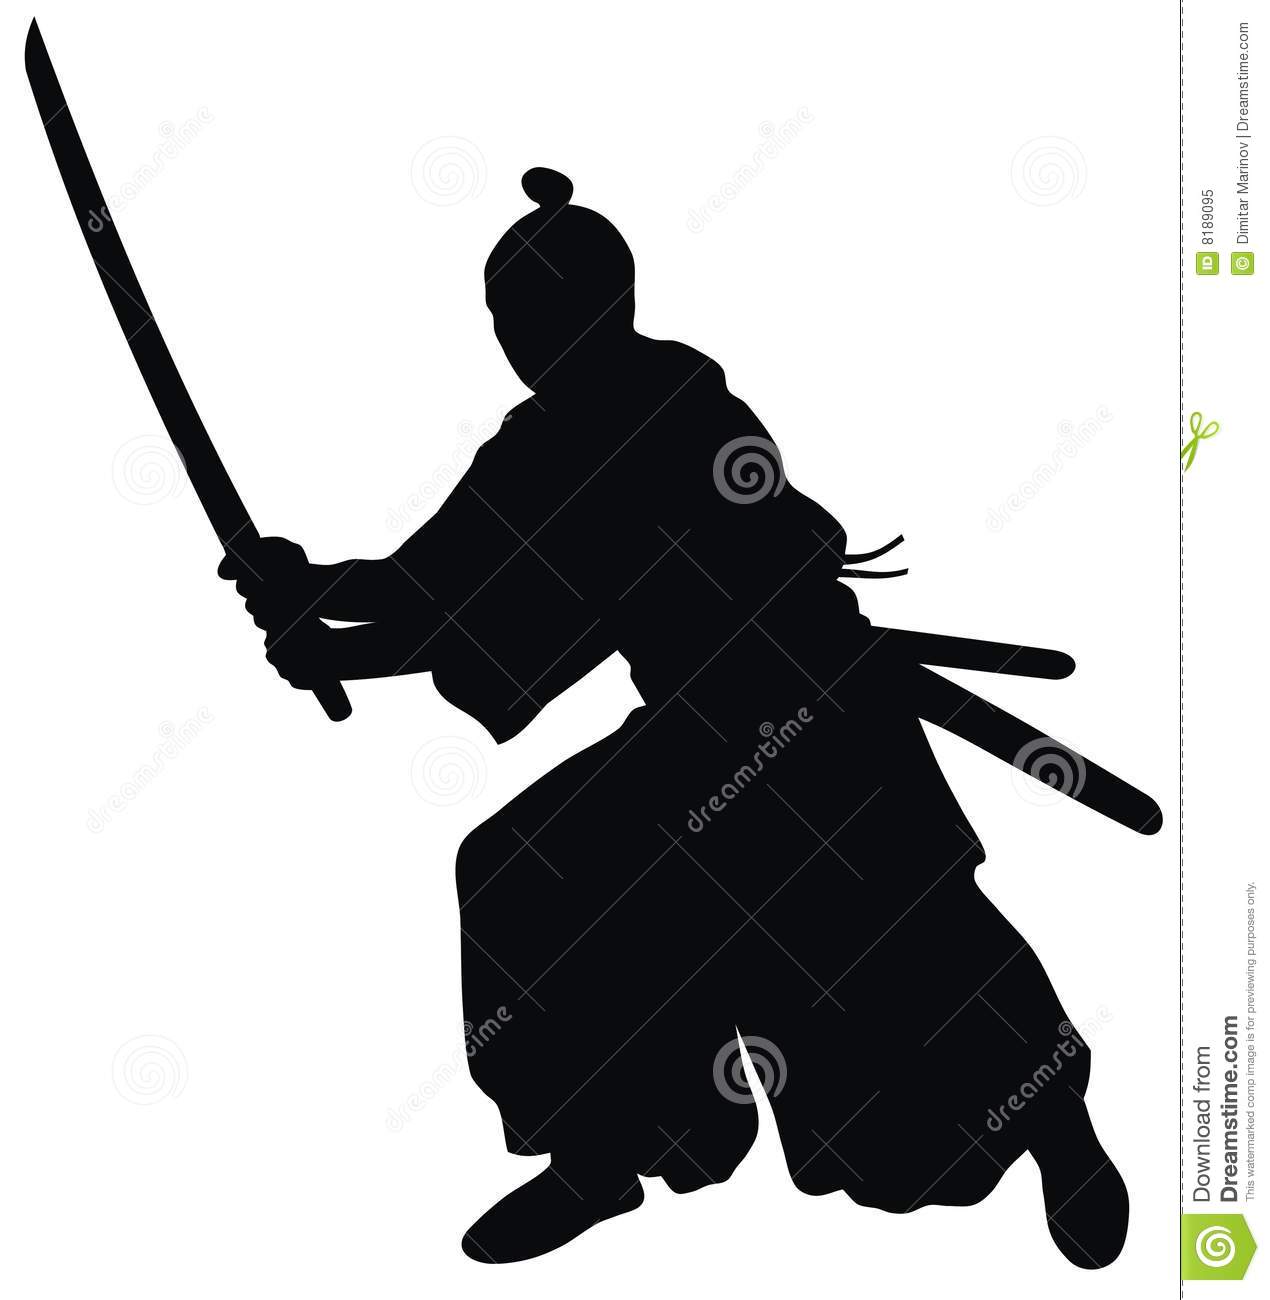 Samurai Royalty Free Stock Photo   Image  8189095